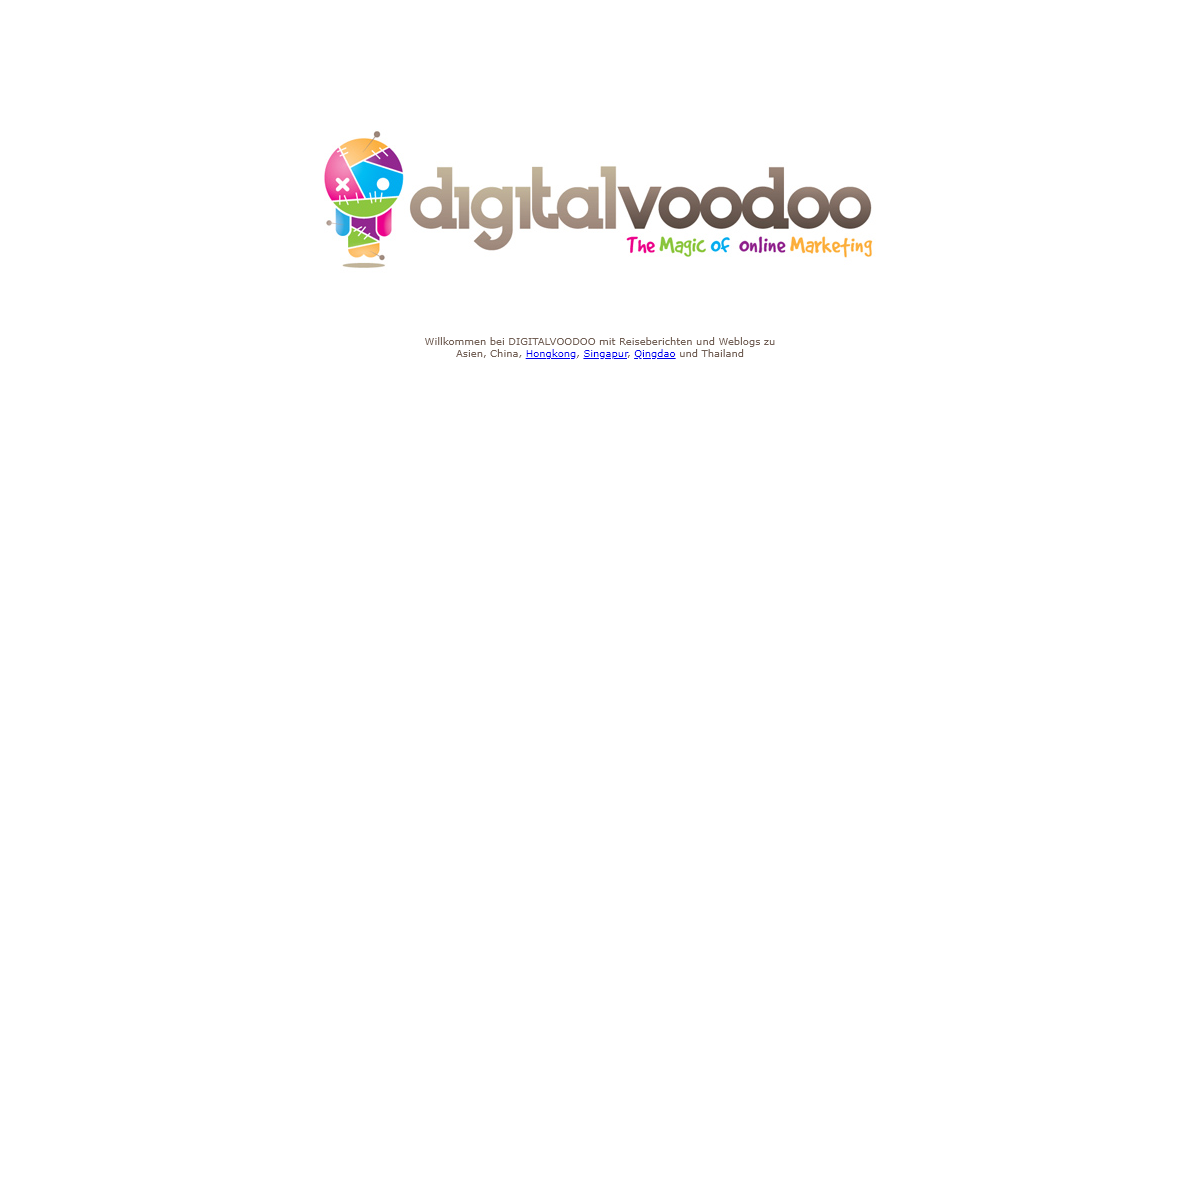 A complete backup of digitalvoodoo.de